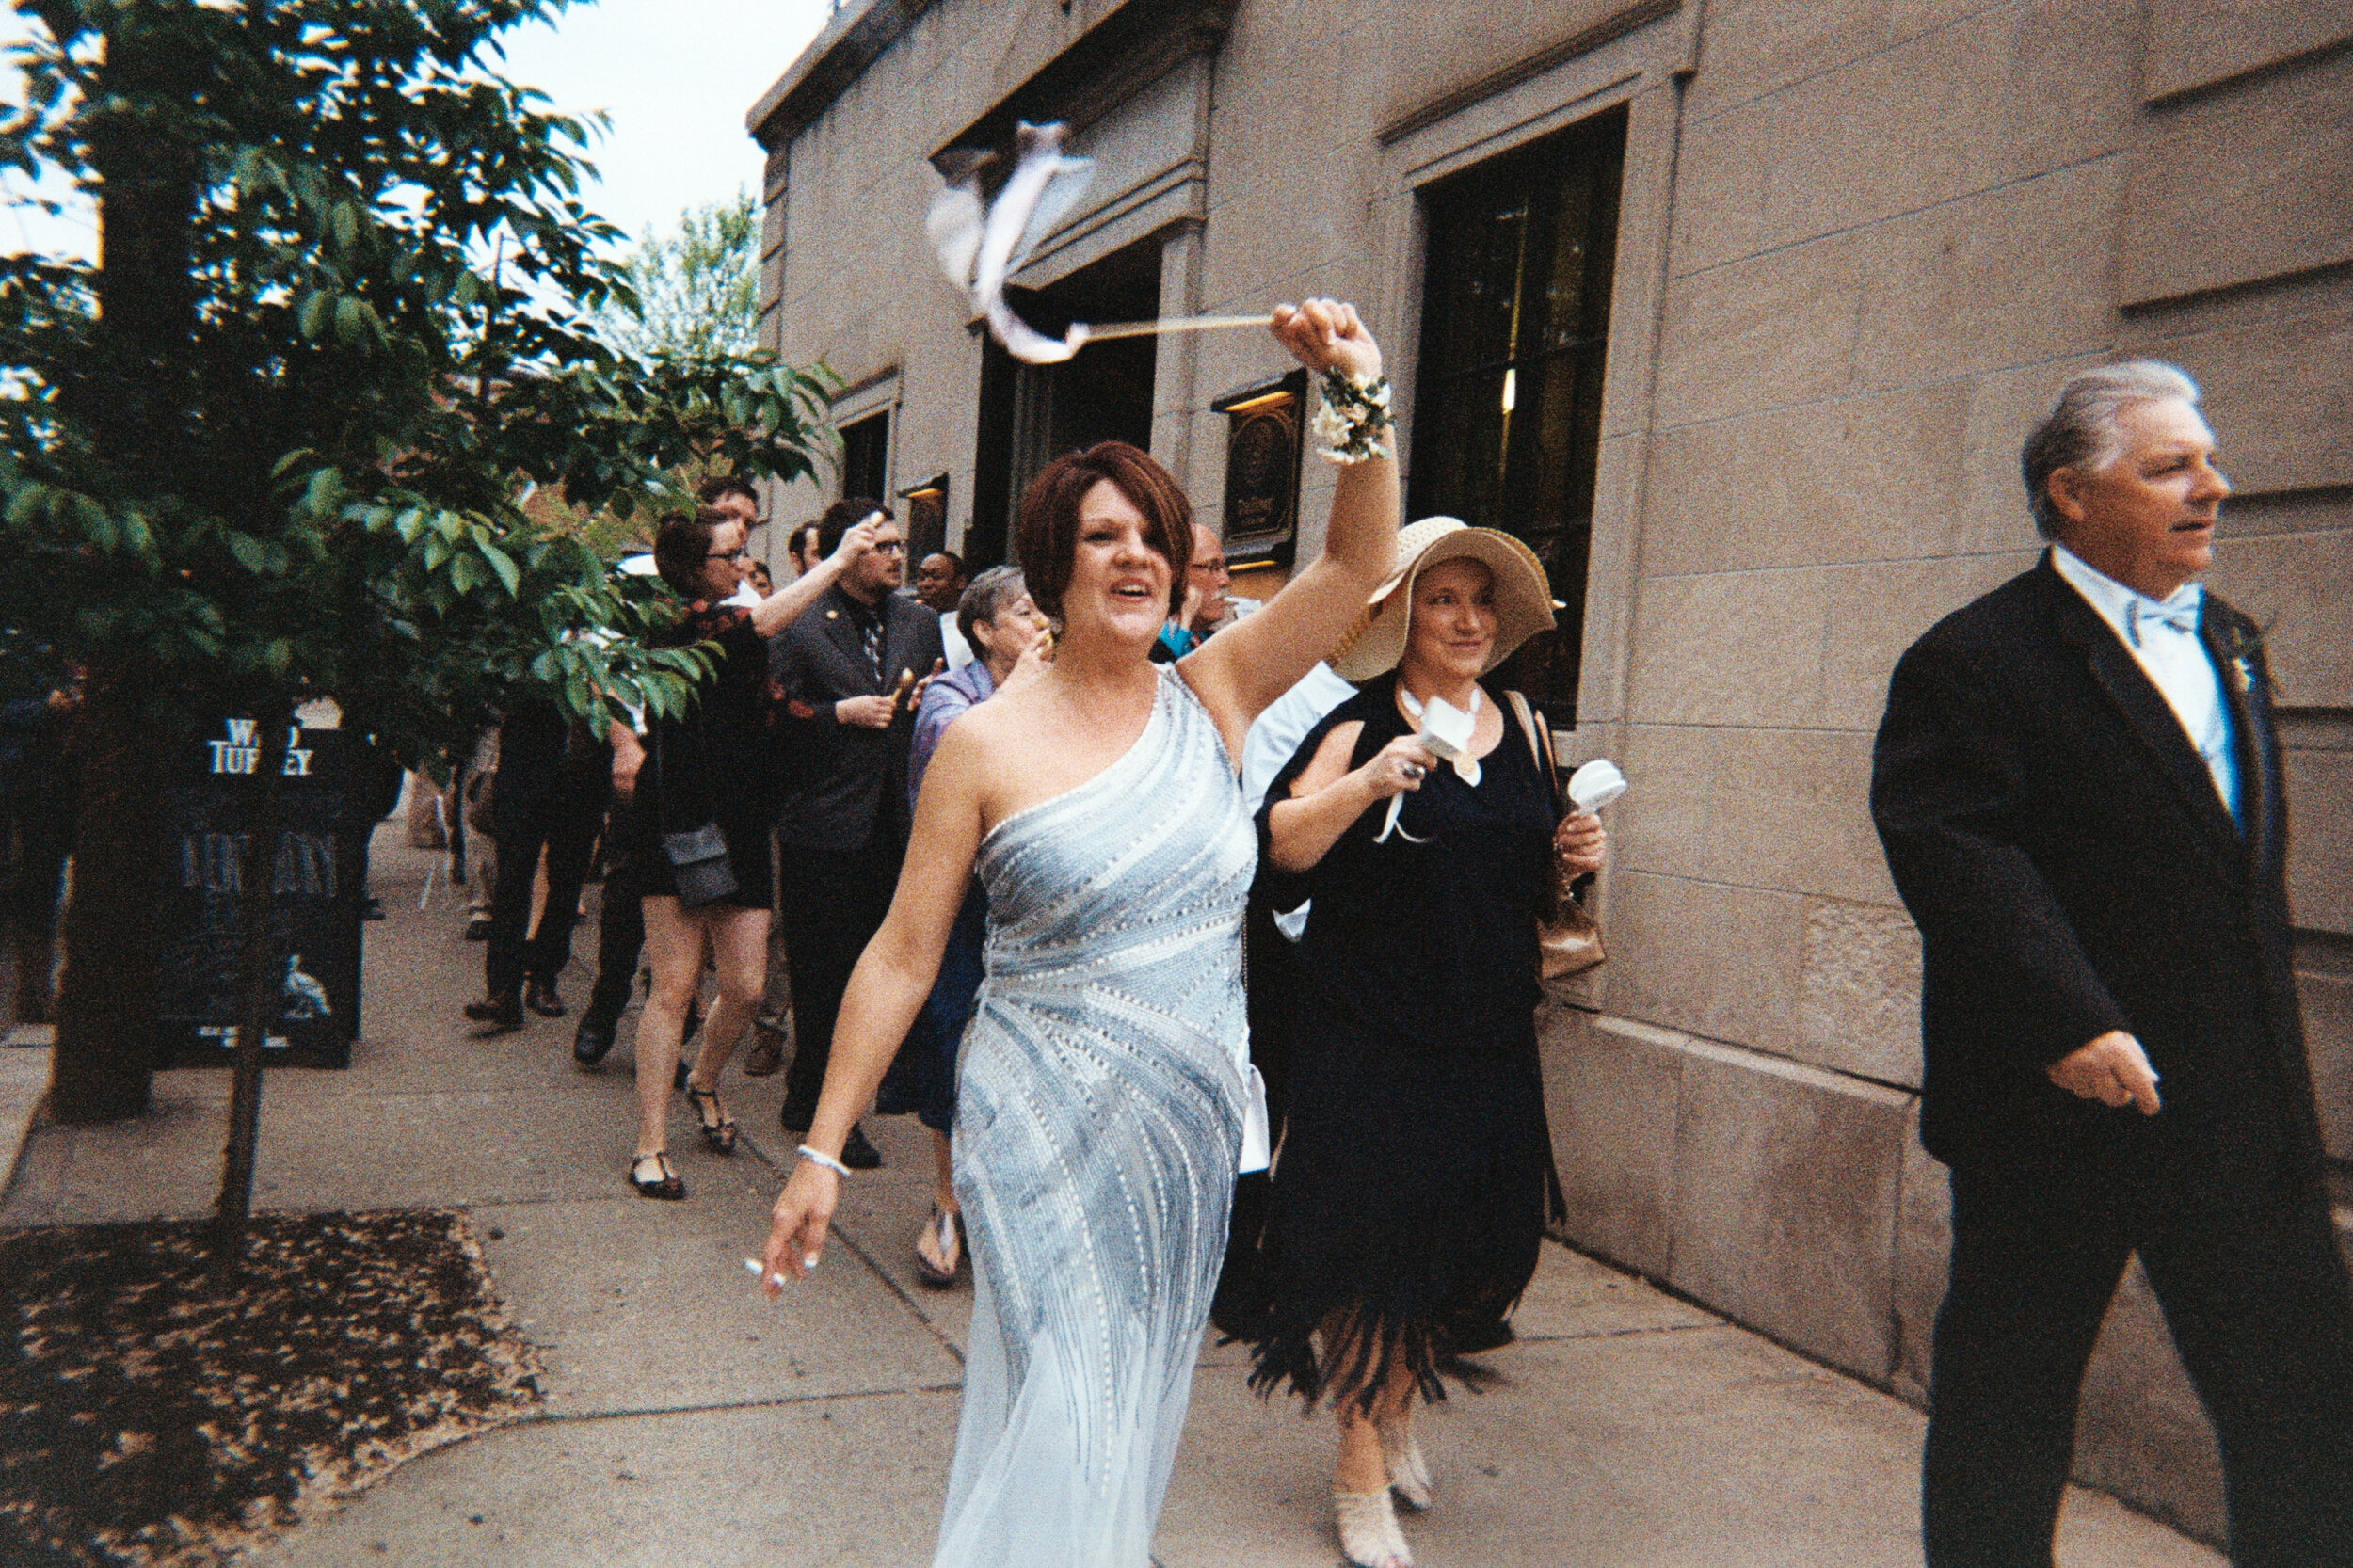 Pittsburgh NYC Film Wedding Photographer - Rat Lab - Lawrenceville - Stephanie Dave191.jpg